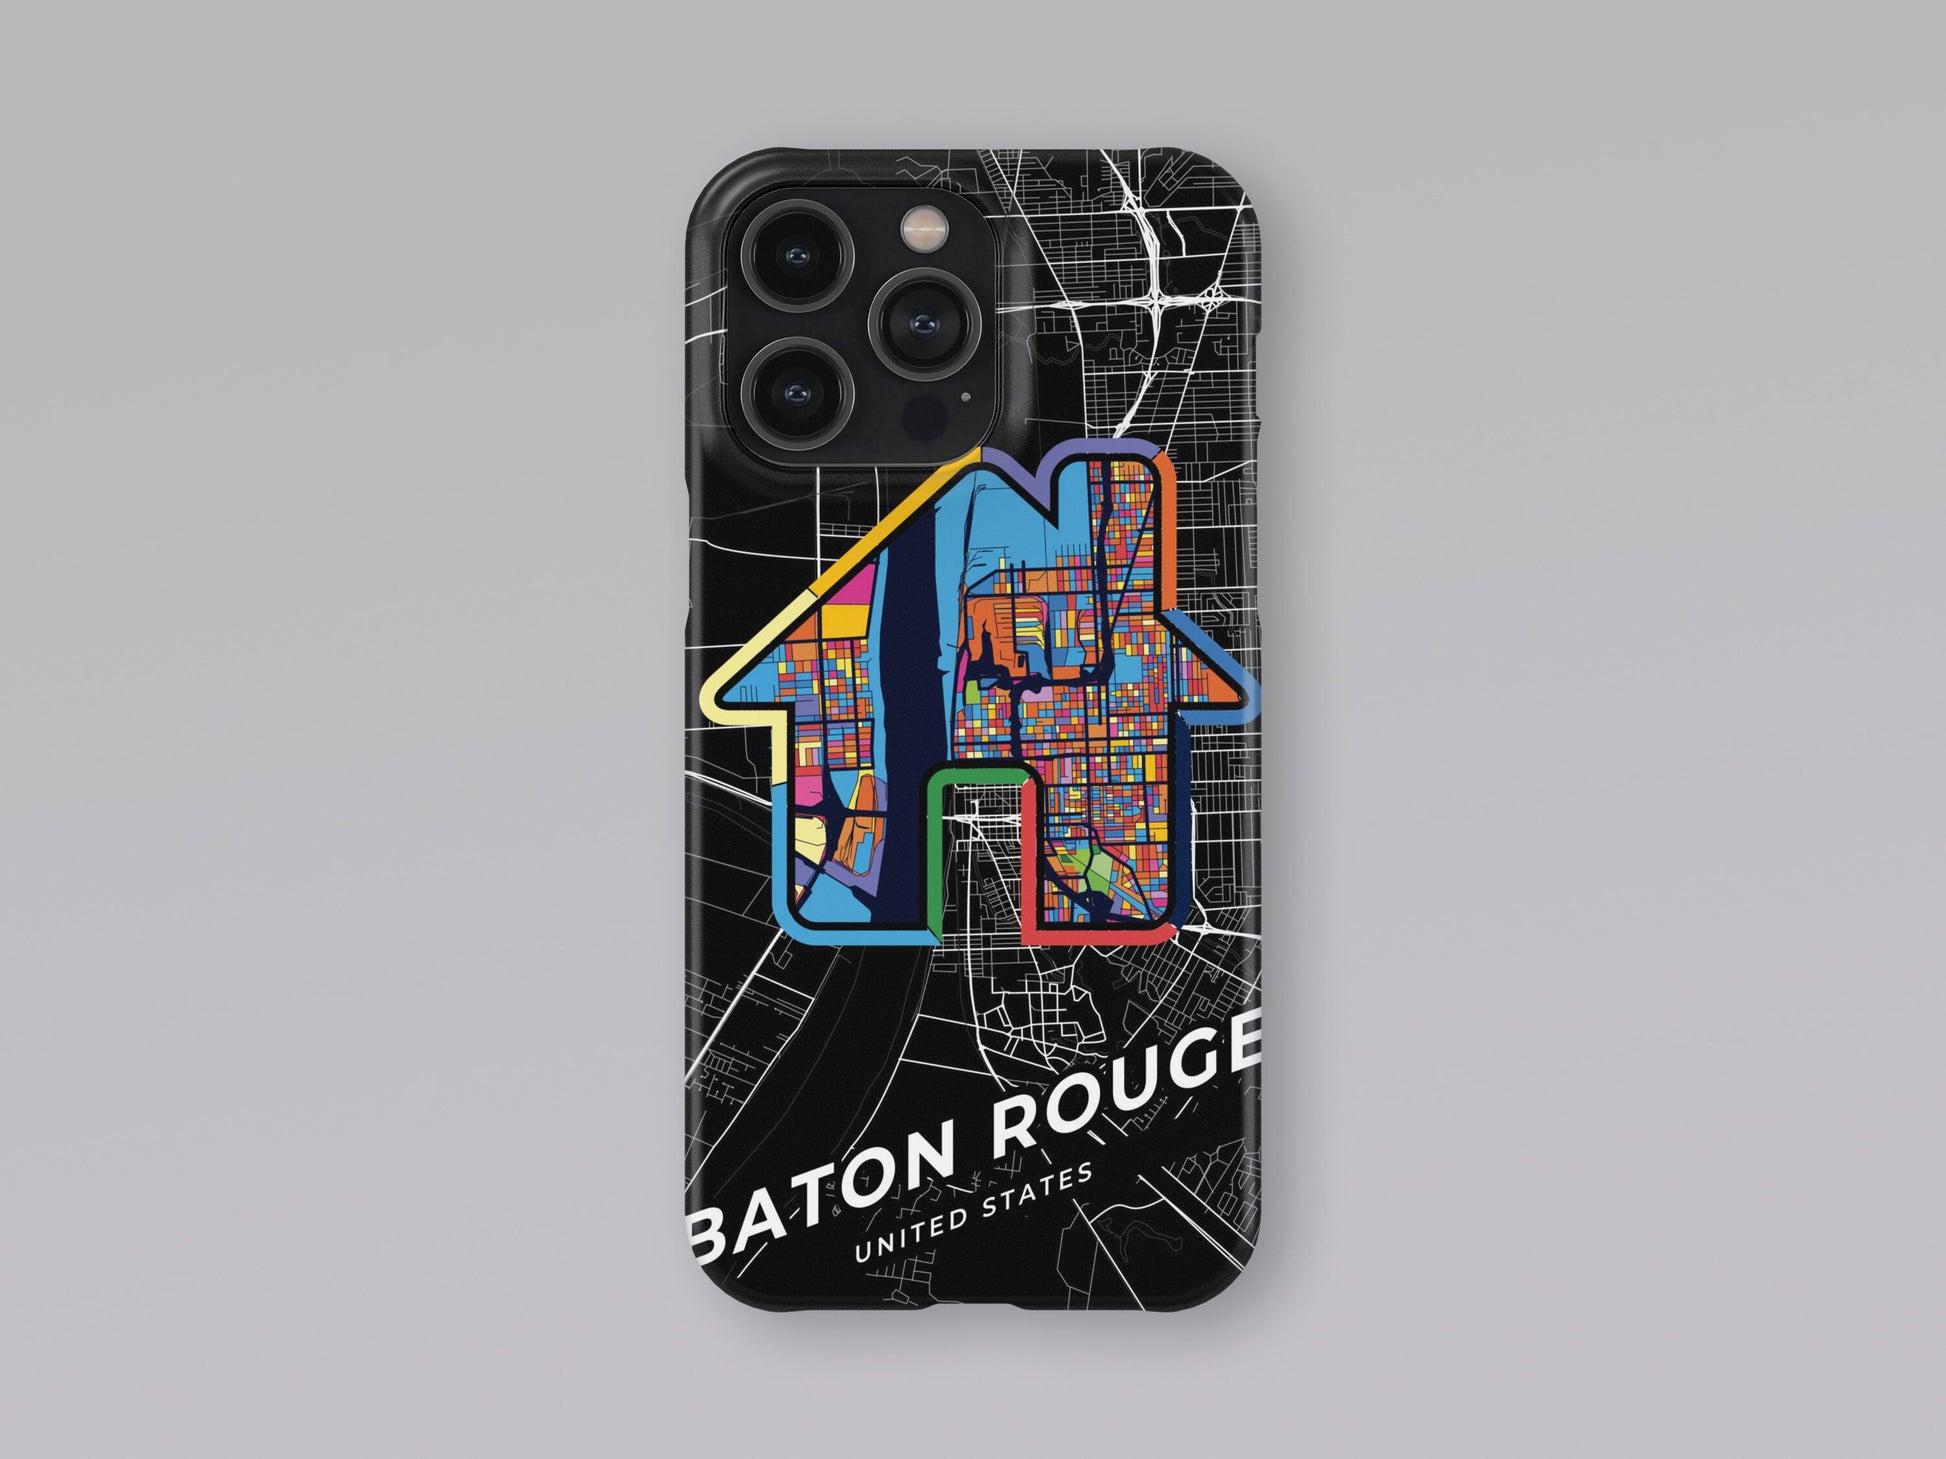 Baton Rouge Louisiana slim phone case with colorful icon. Birthday, wedding or housewarming gift. Couple match cases. 3